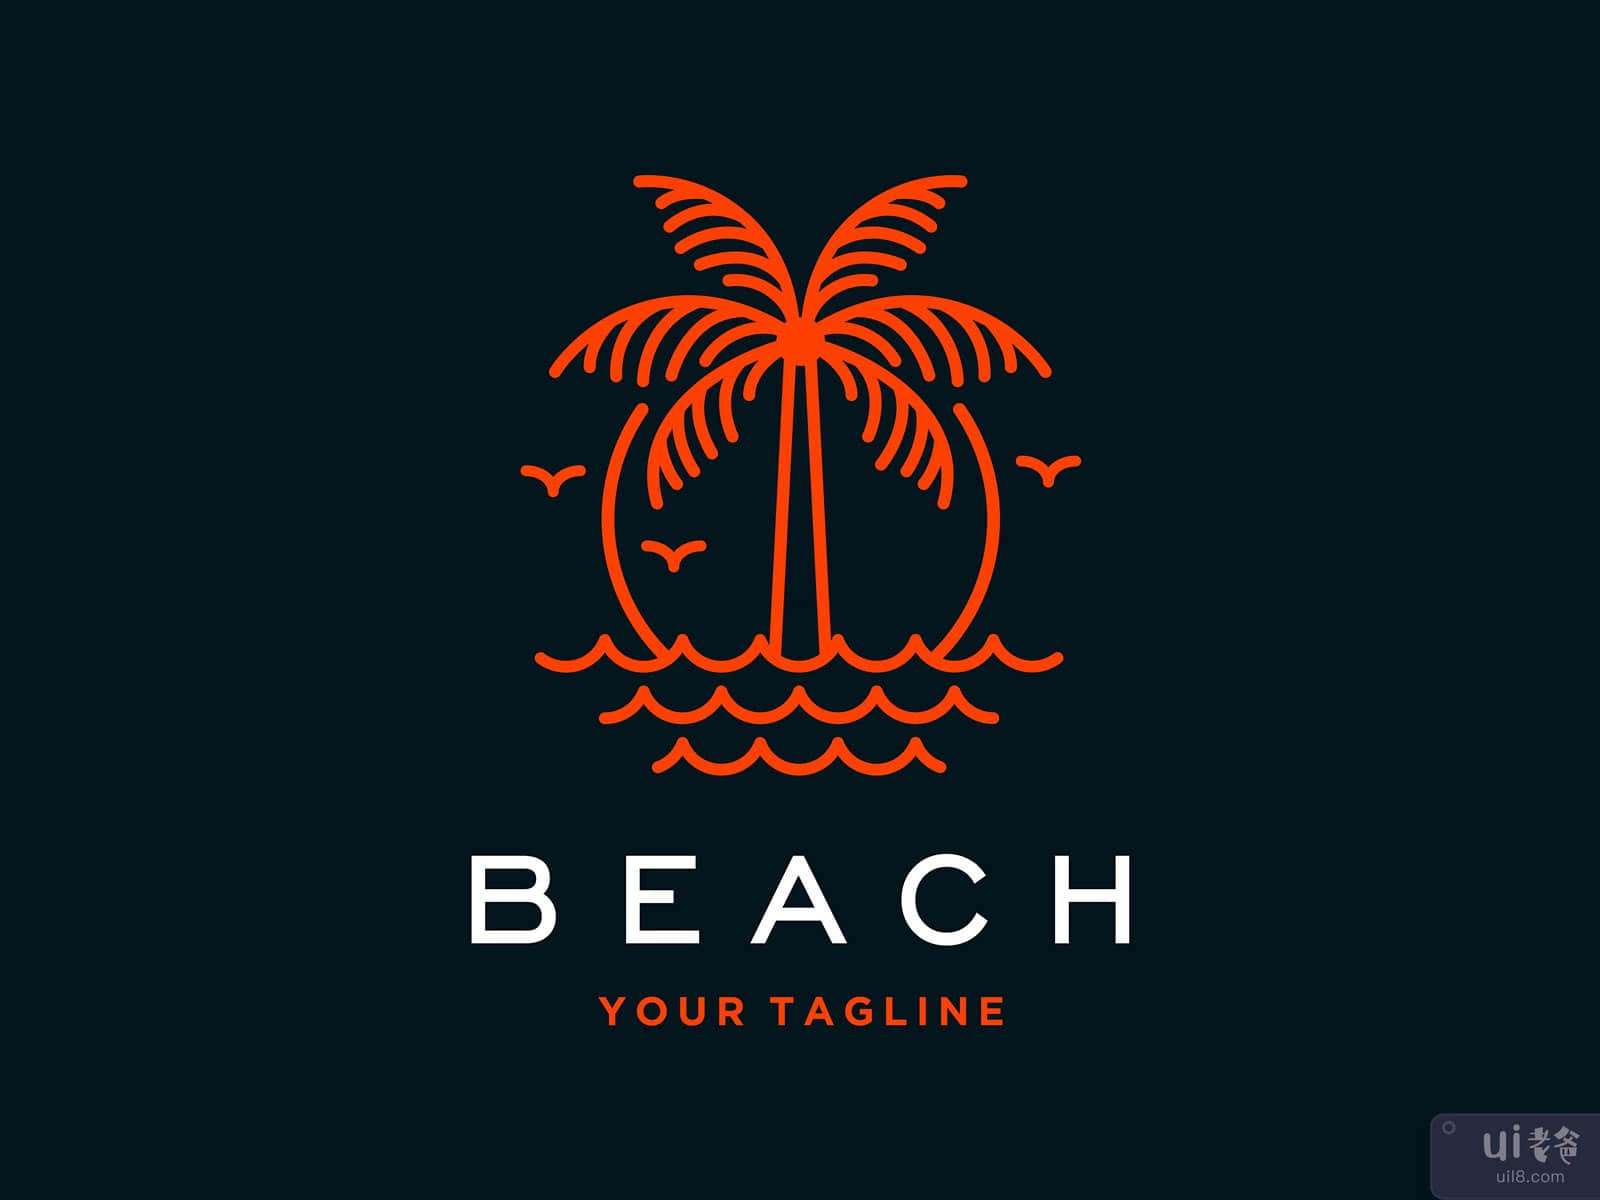 Beach logo with palm tree vector